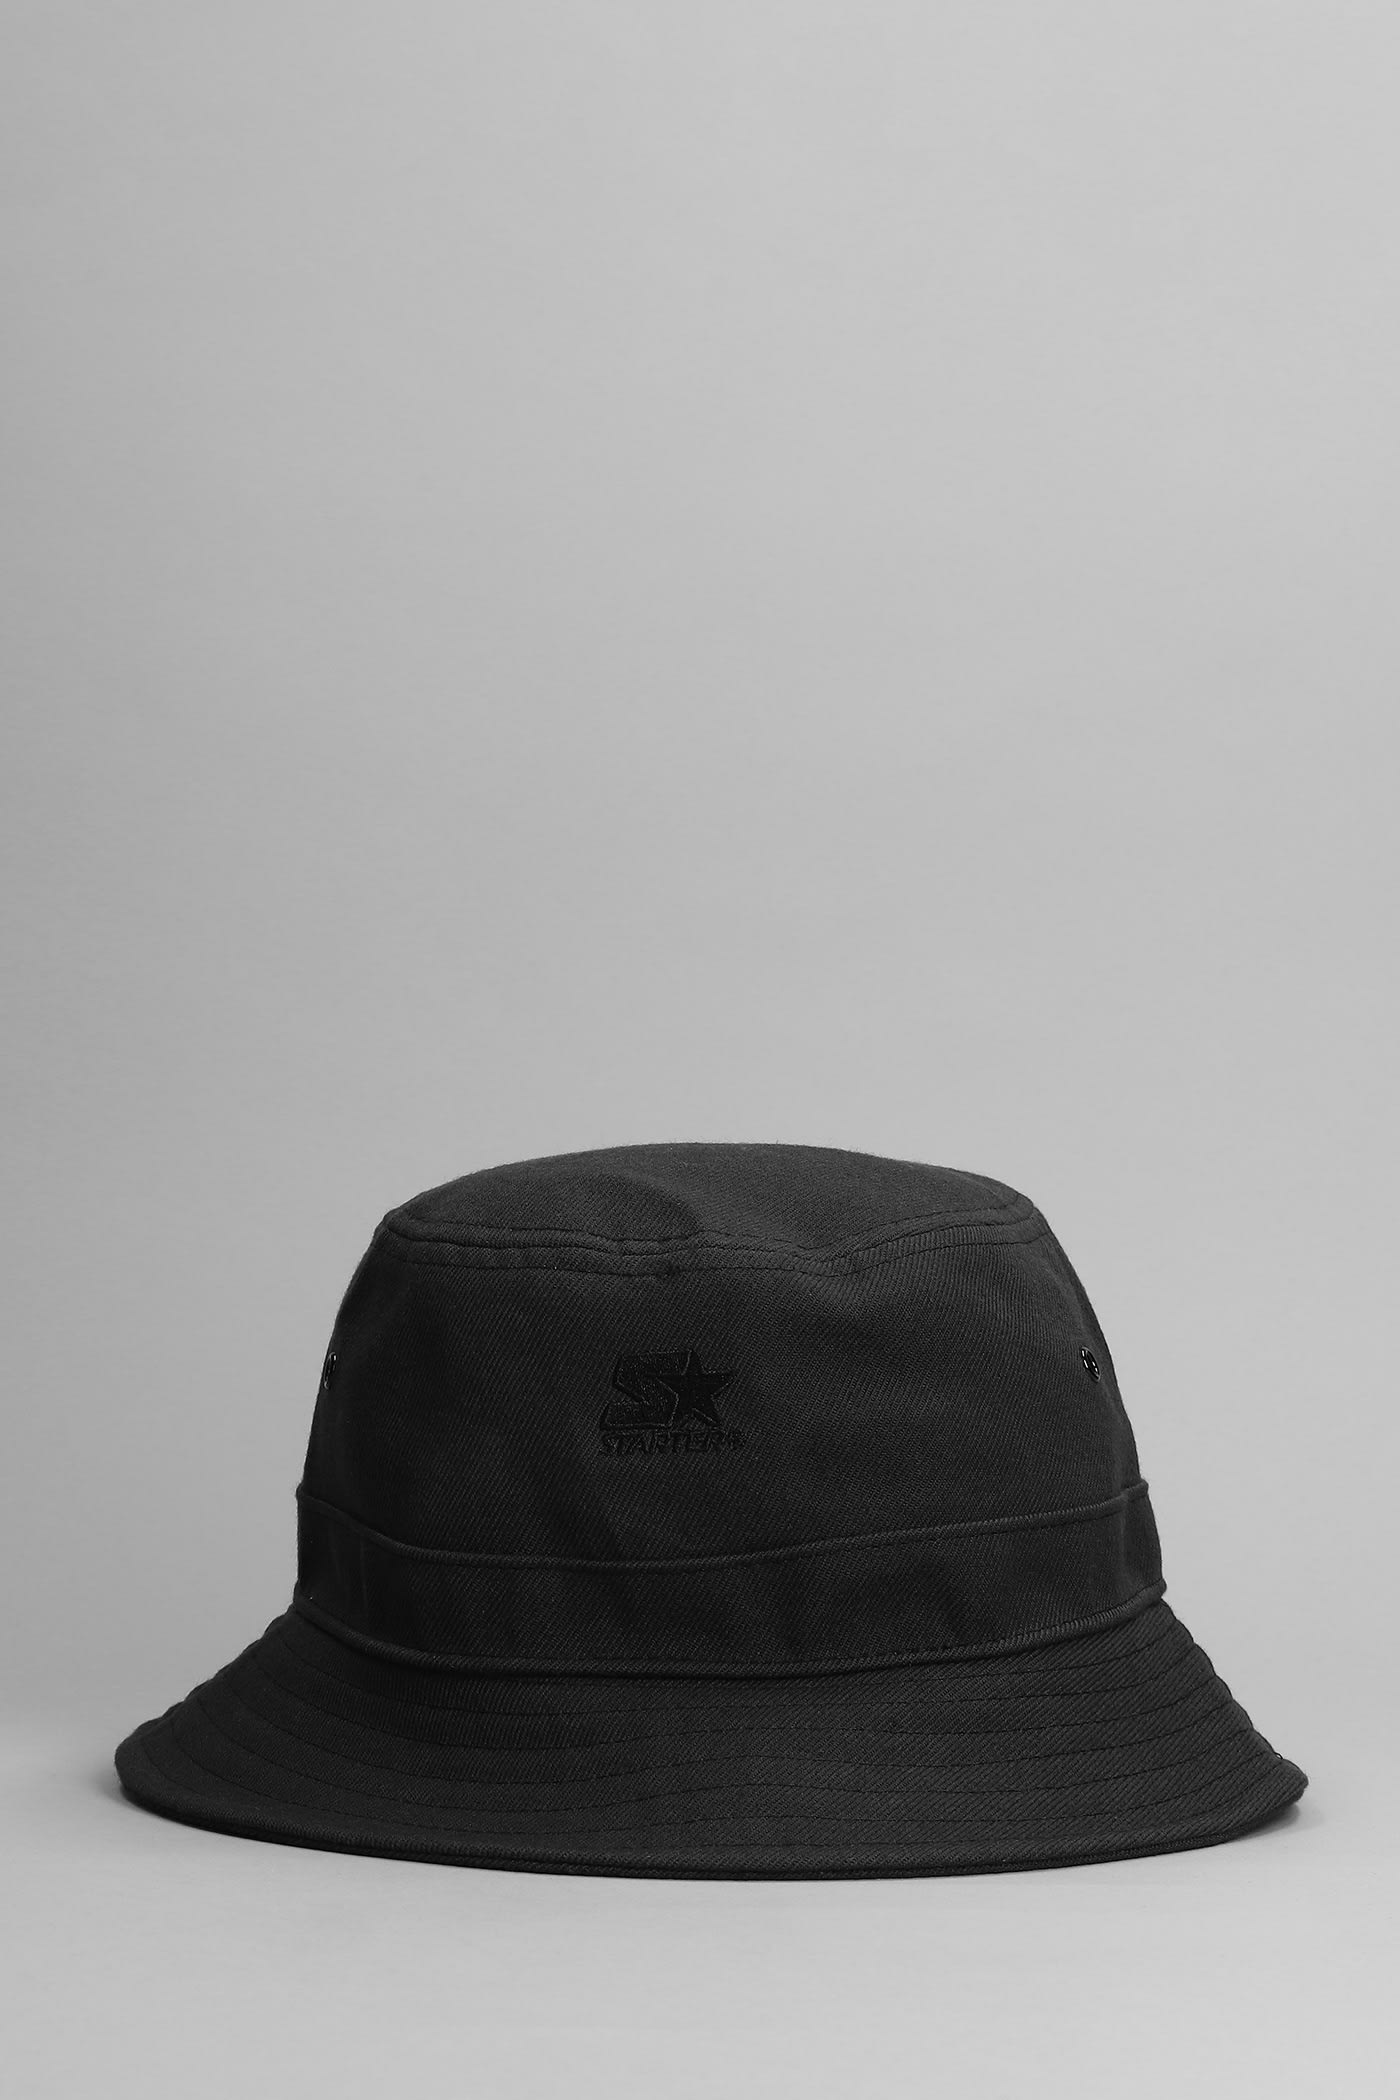 MARCELO BURLON COUNTY OF MILAN HATS IN BLACK COTTON 